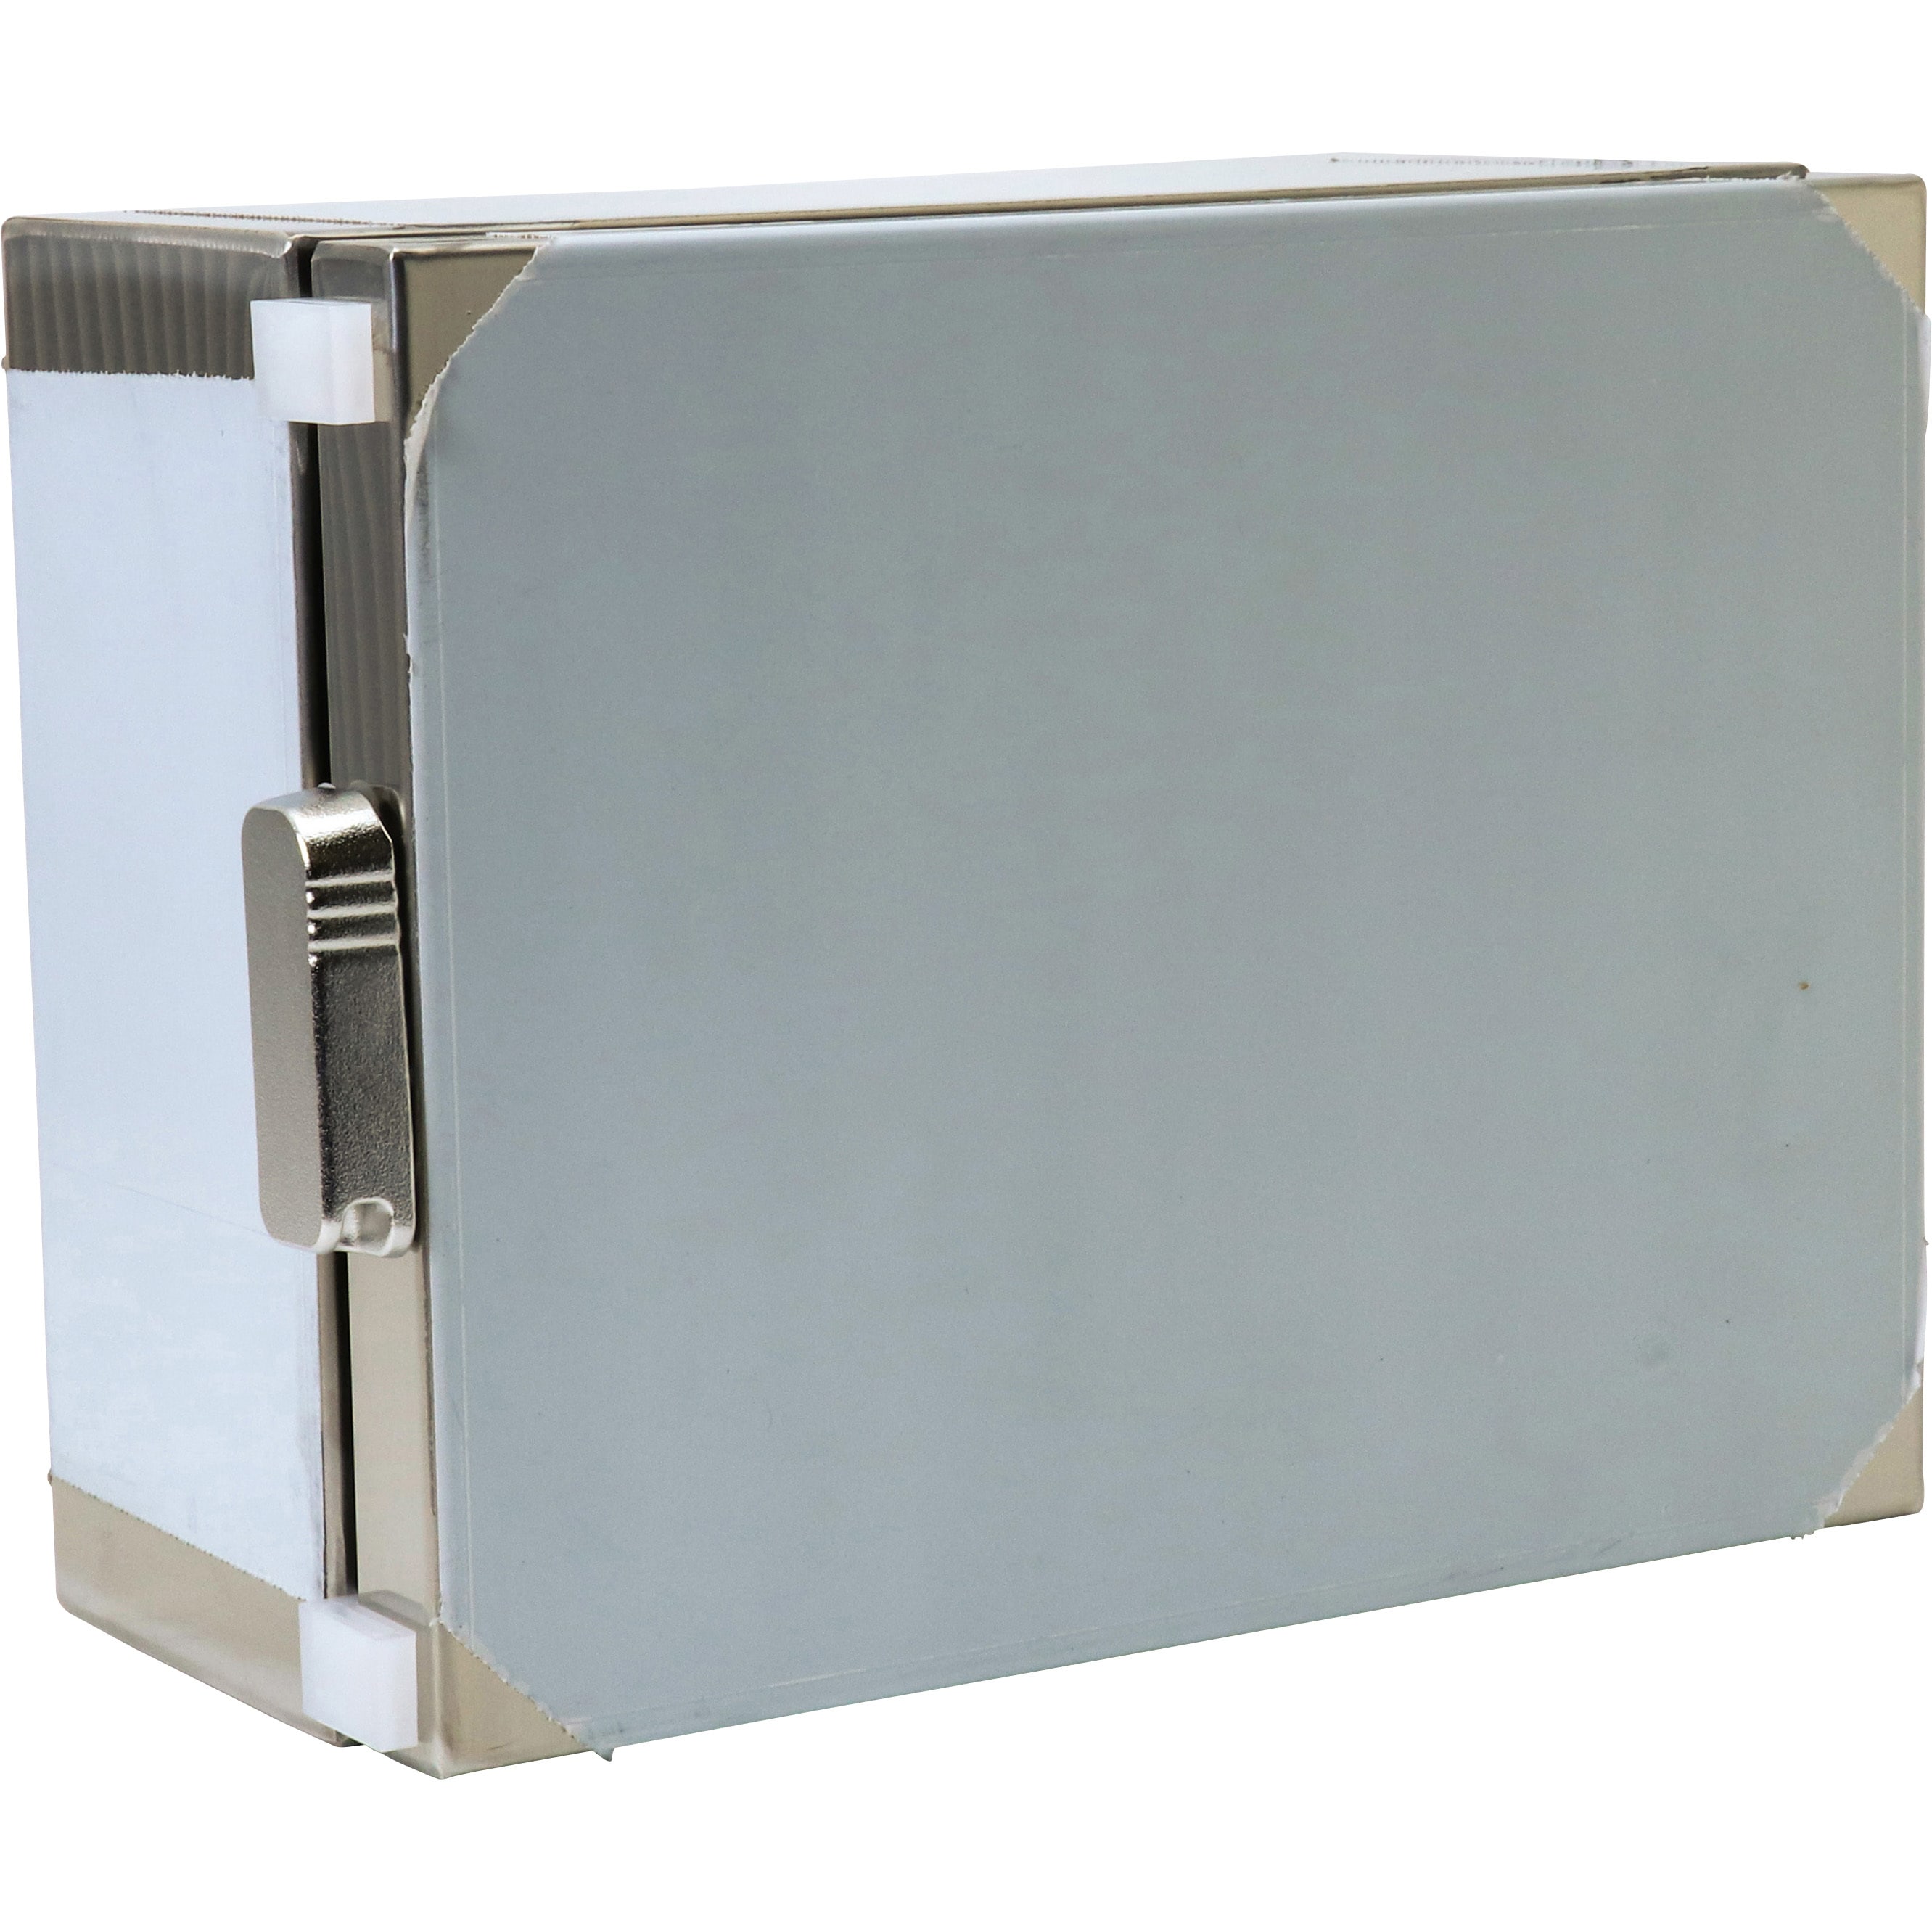 CL20-43C 日東工業 CL形ボックス(防塵・防水構造、鉄製基板) クリーム